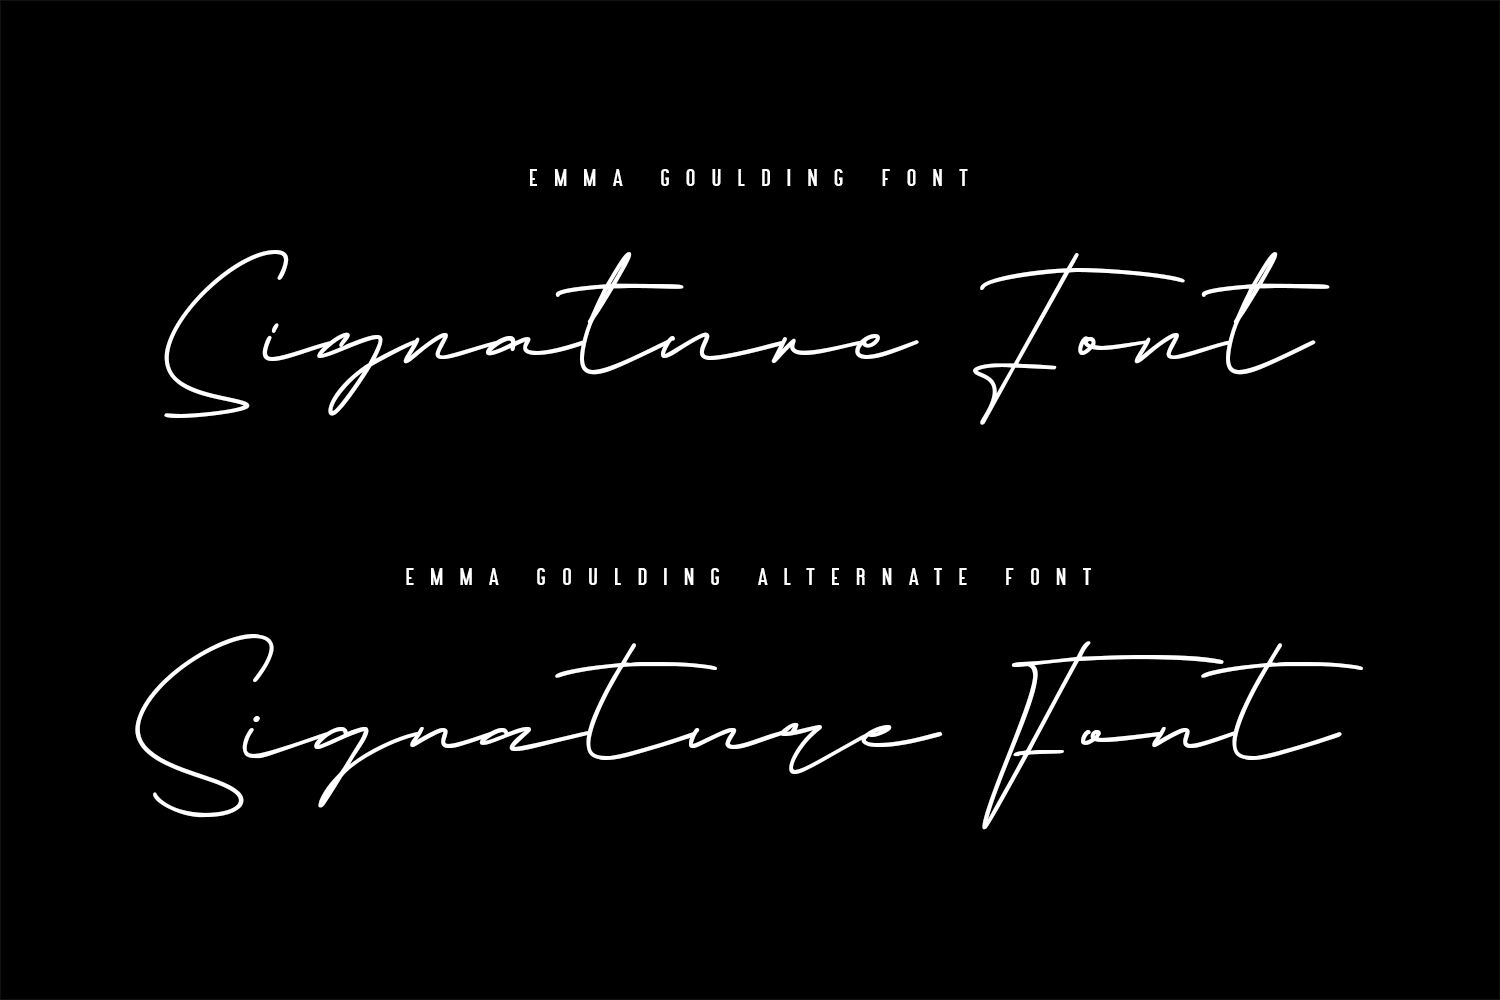 Emma Goulding Signature Collection Script Font By Maulana Creative Thehungryjpeg Com